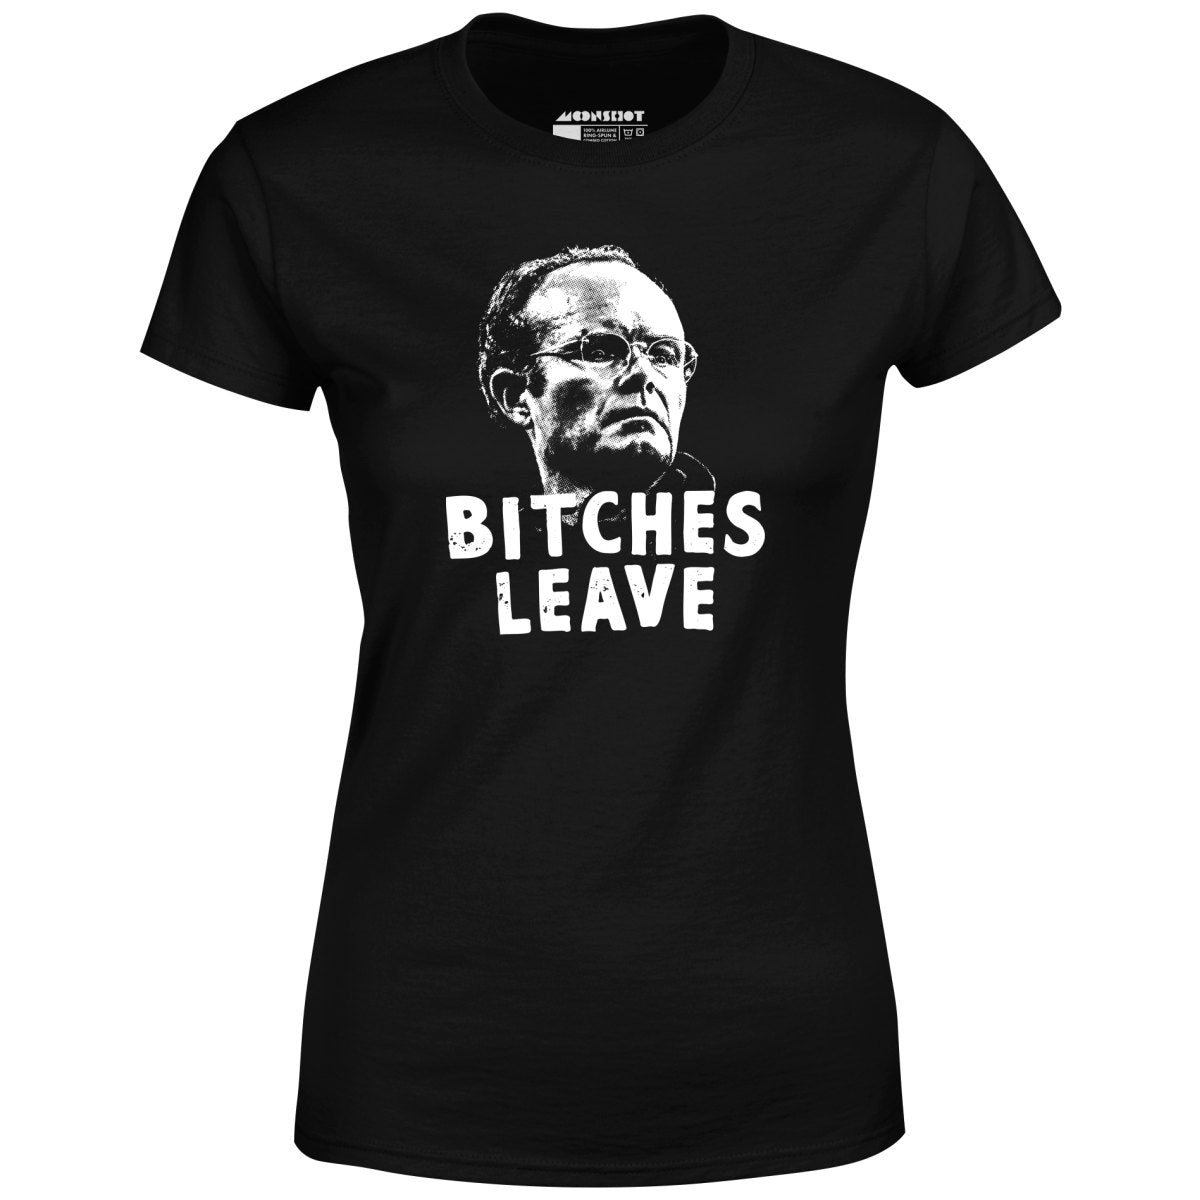 Bitches Leave - Women's T-Shirt